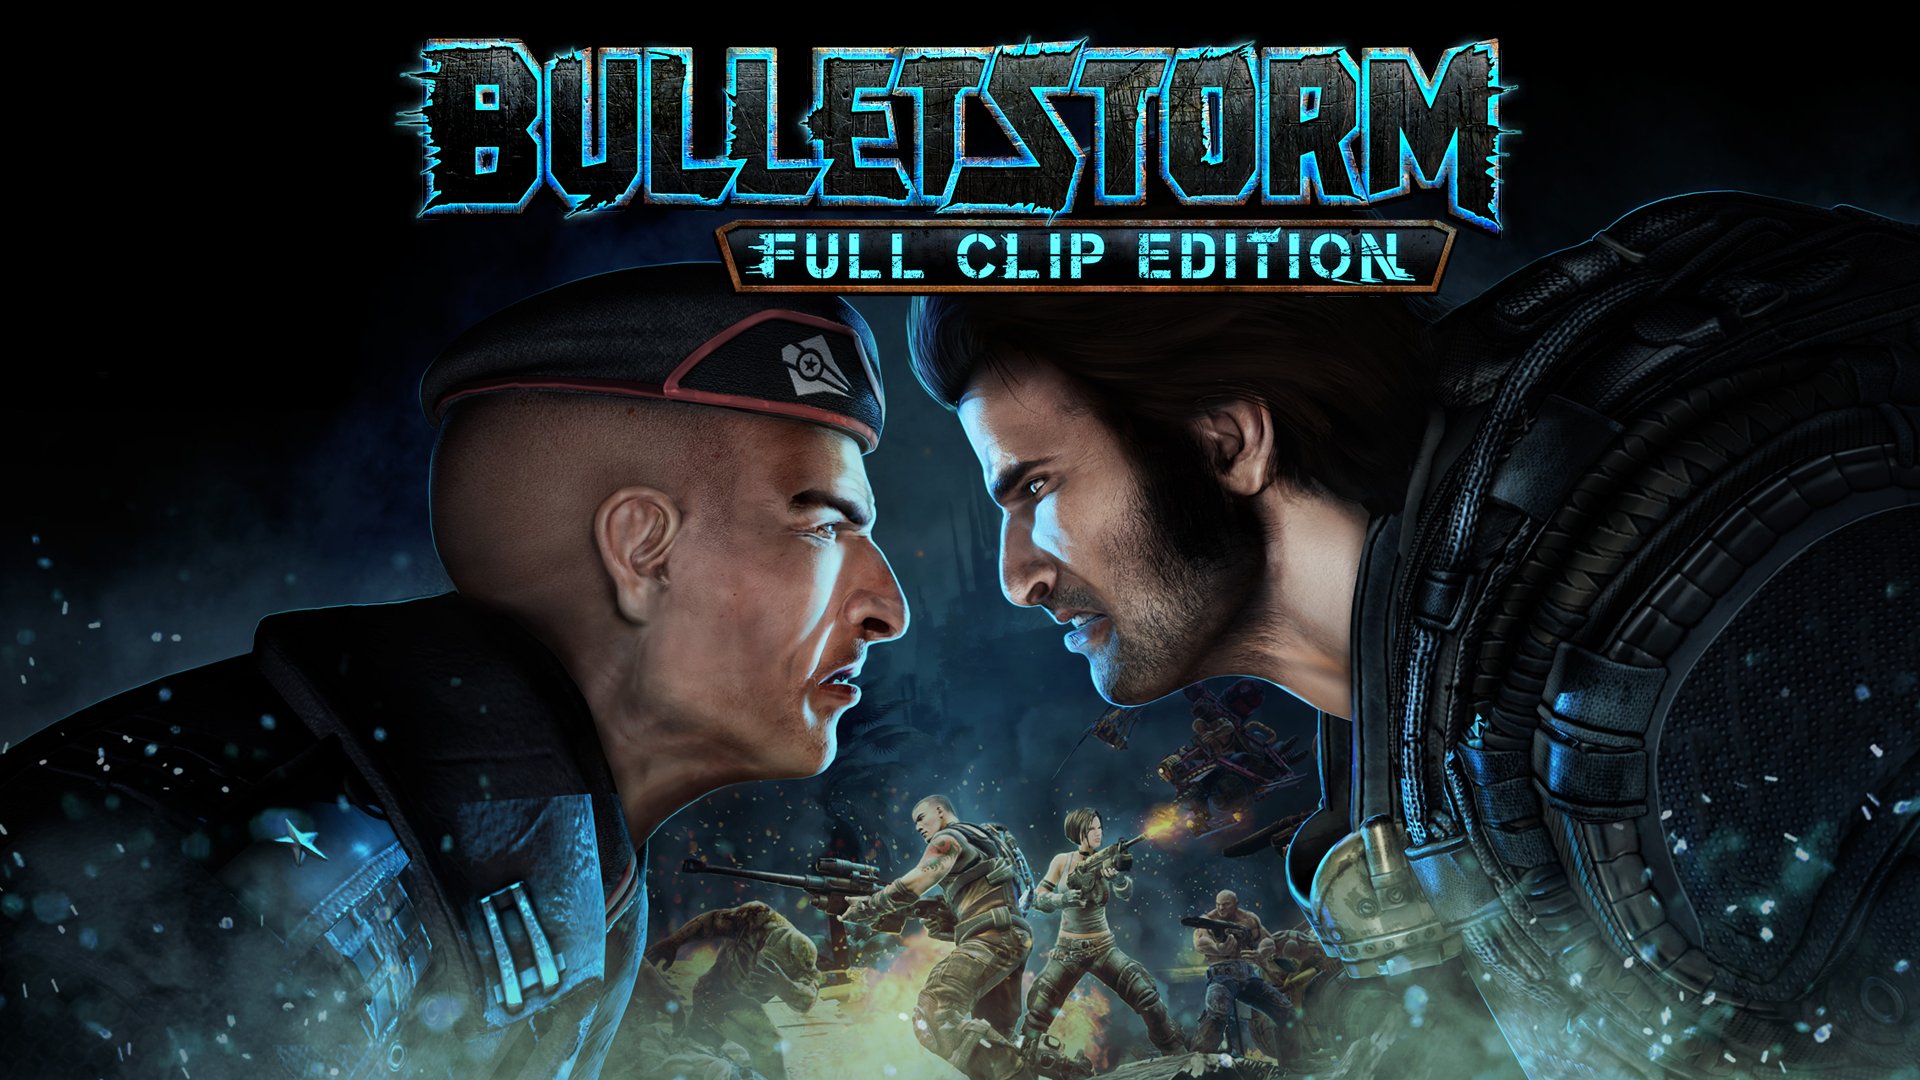 PS Plus de novembro terá Bulletstorm e Yakuza de graça no PS4